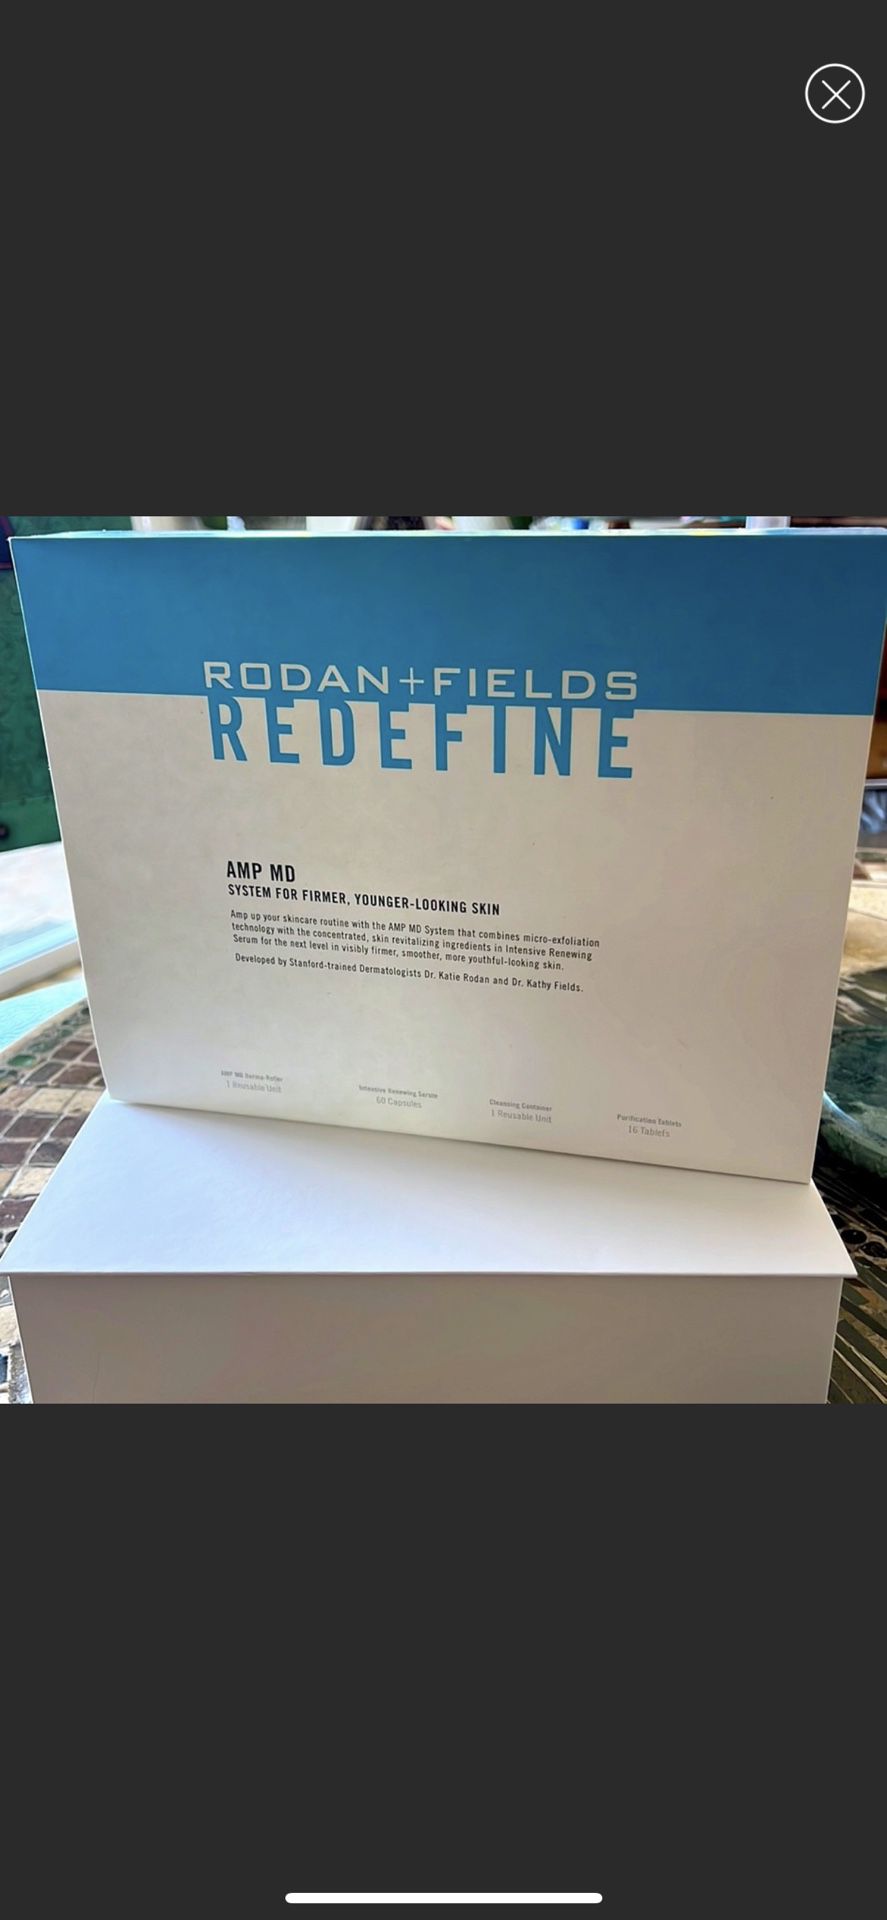 New Rodan & Fields Redefine Kit